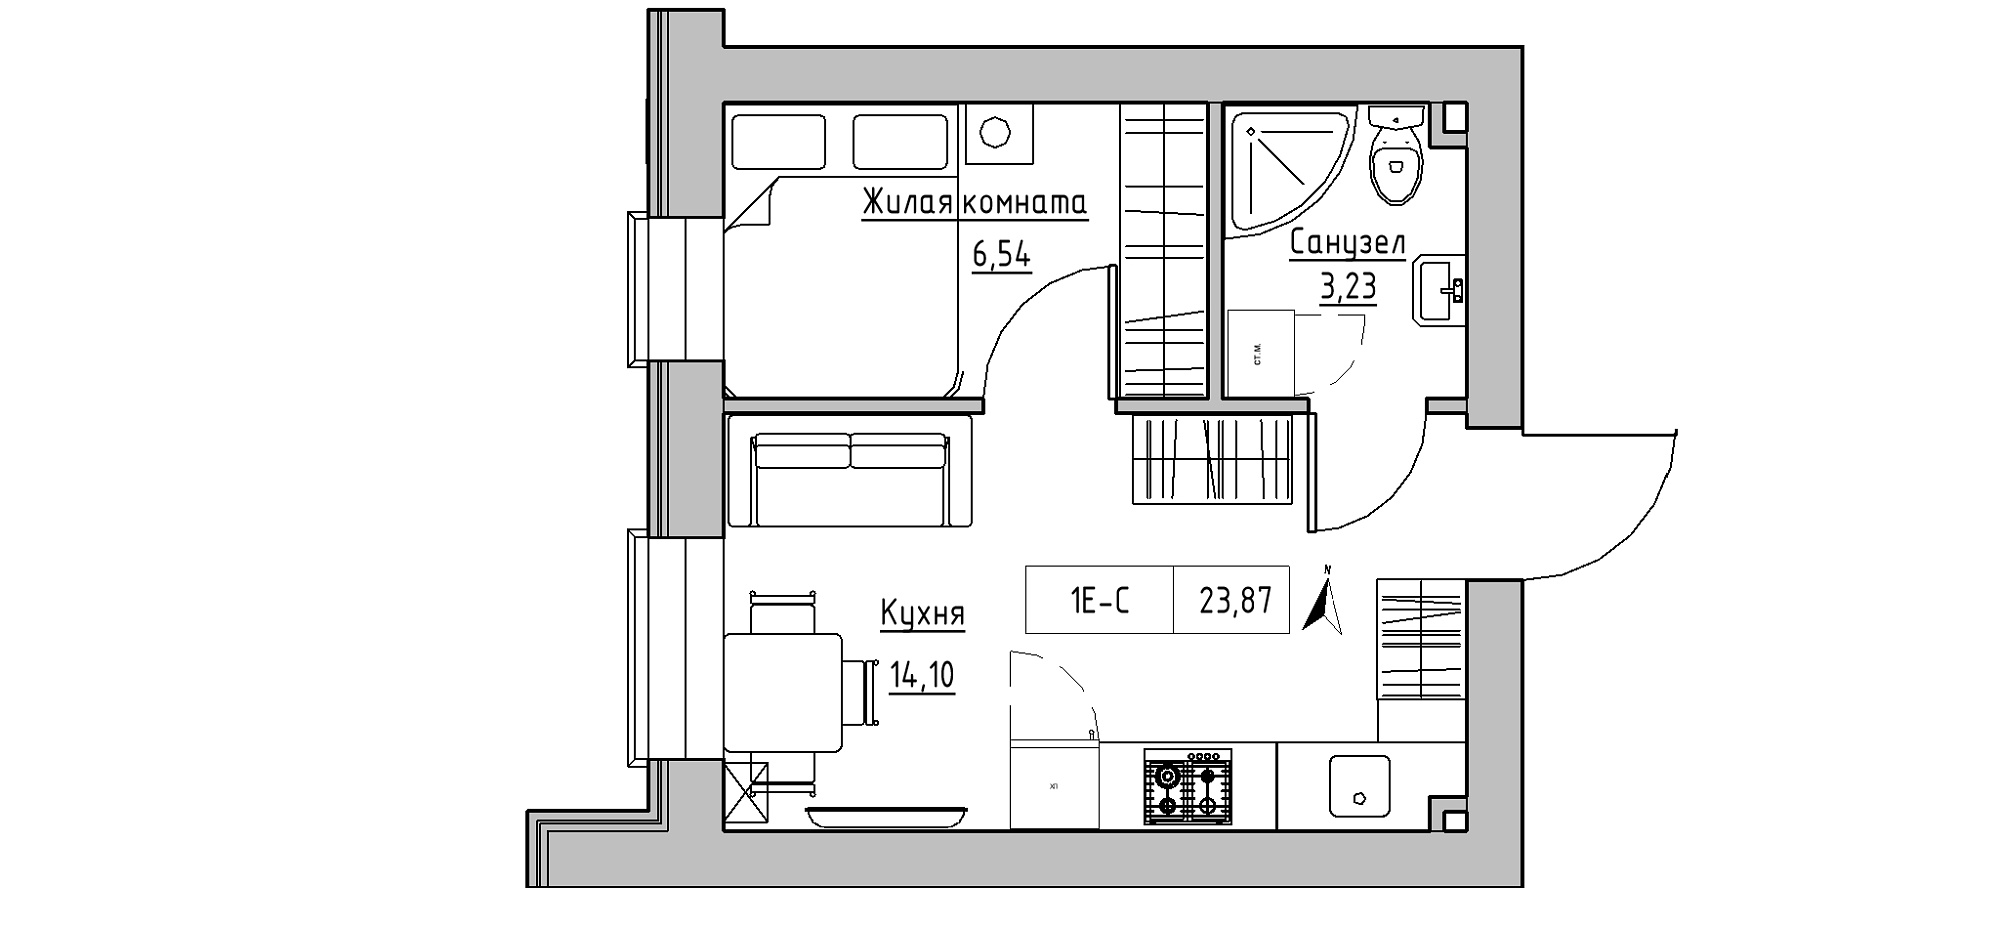 Planning 1-rm flats area 23.87m2, KS-020-03/0012.